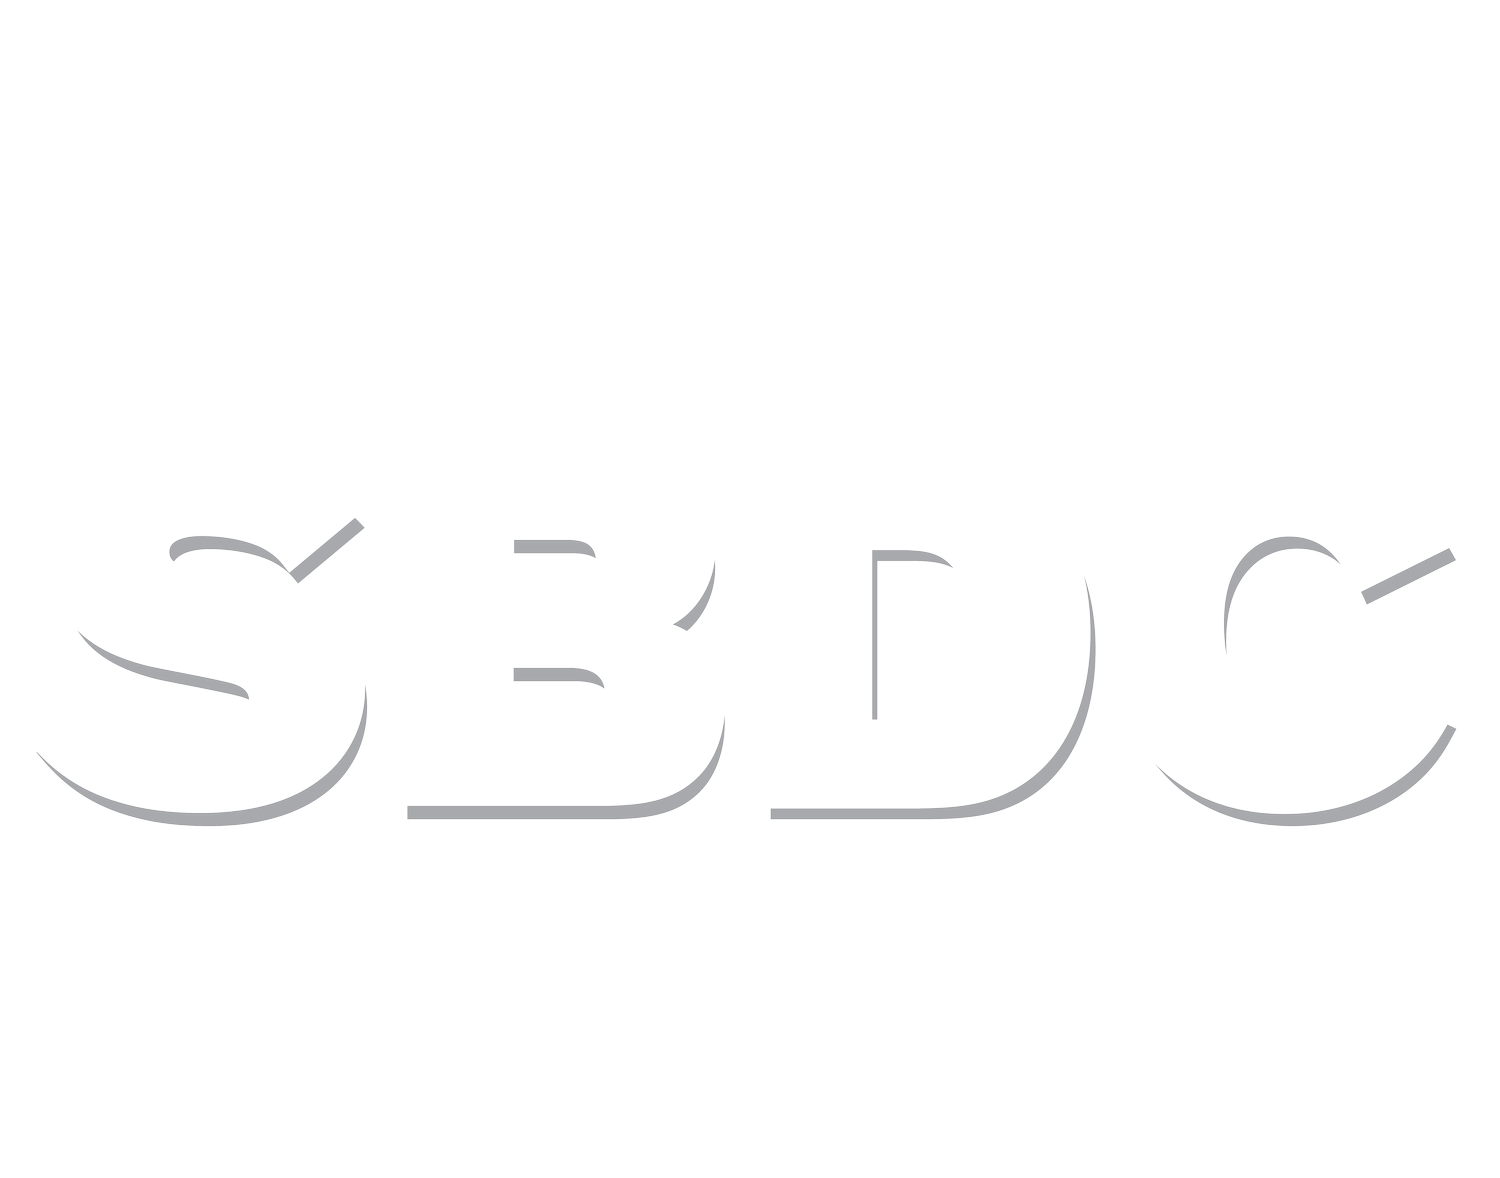 Mississippi SBDC Impact